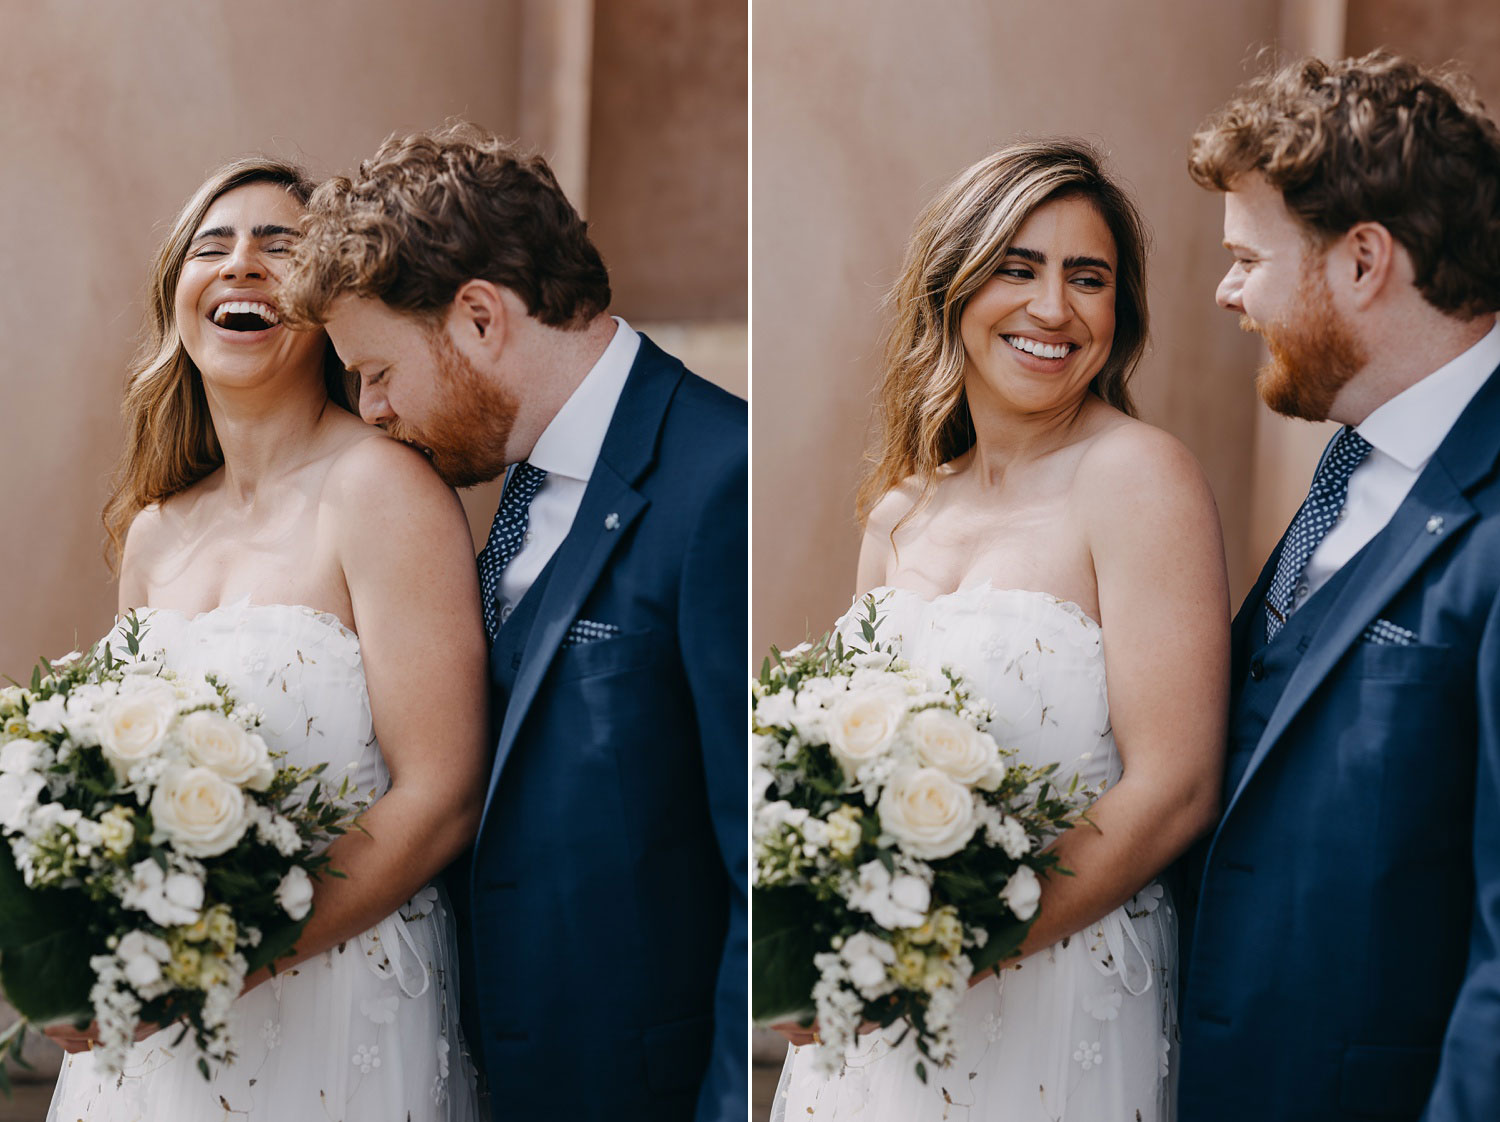 Candid Moment - Copenhagen Wedding Photographer